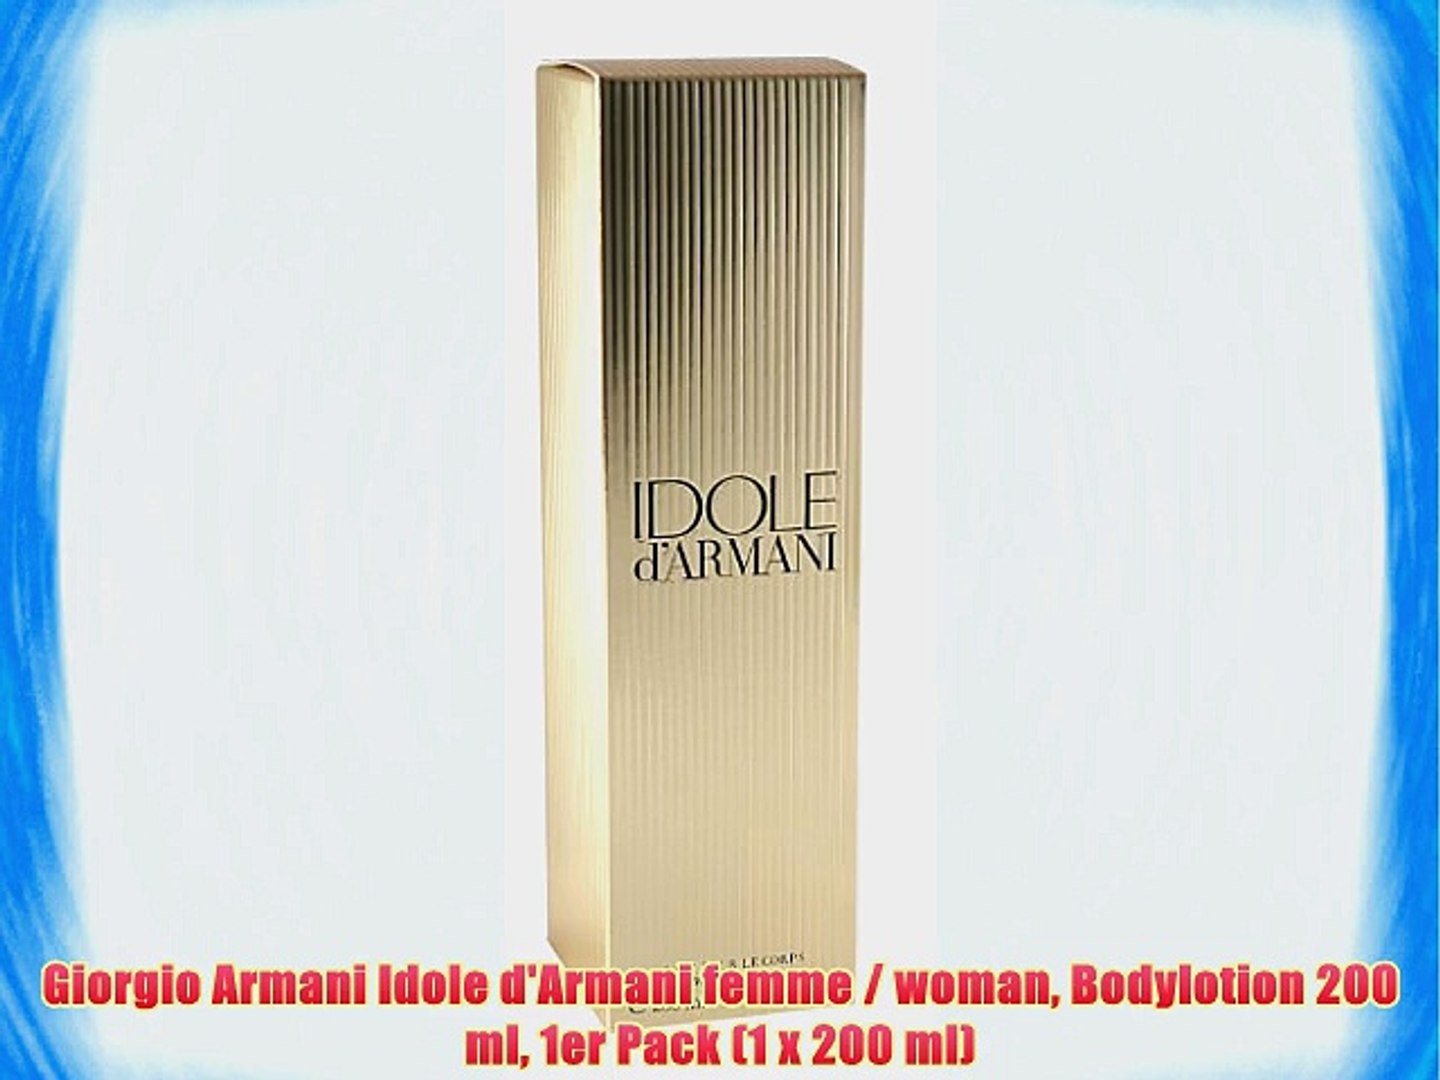 ⁣Giorgio Armani Idole d'Armani femme / woman Bodylotion 200 ml 1er Pack (1 x 200 ml)